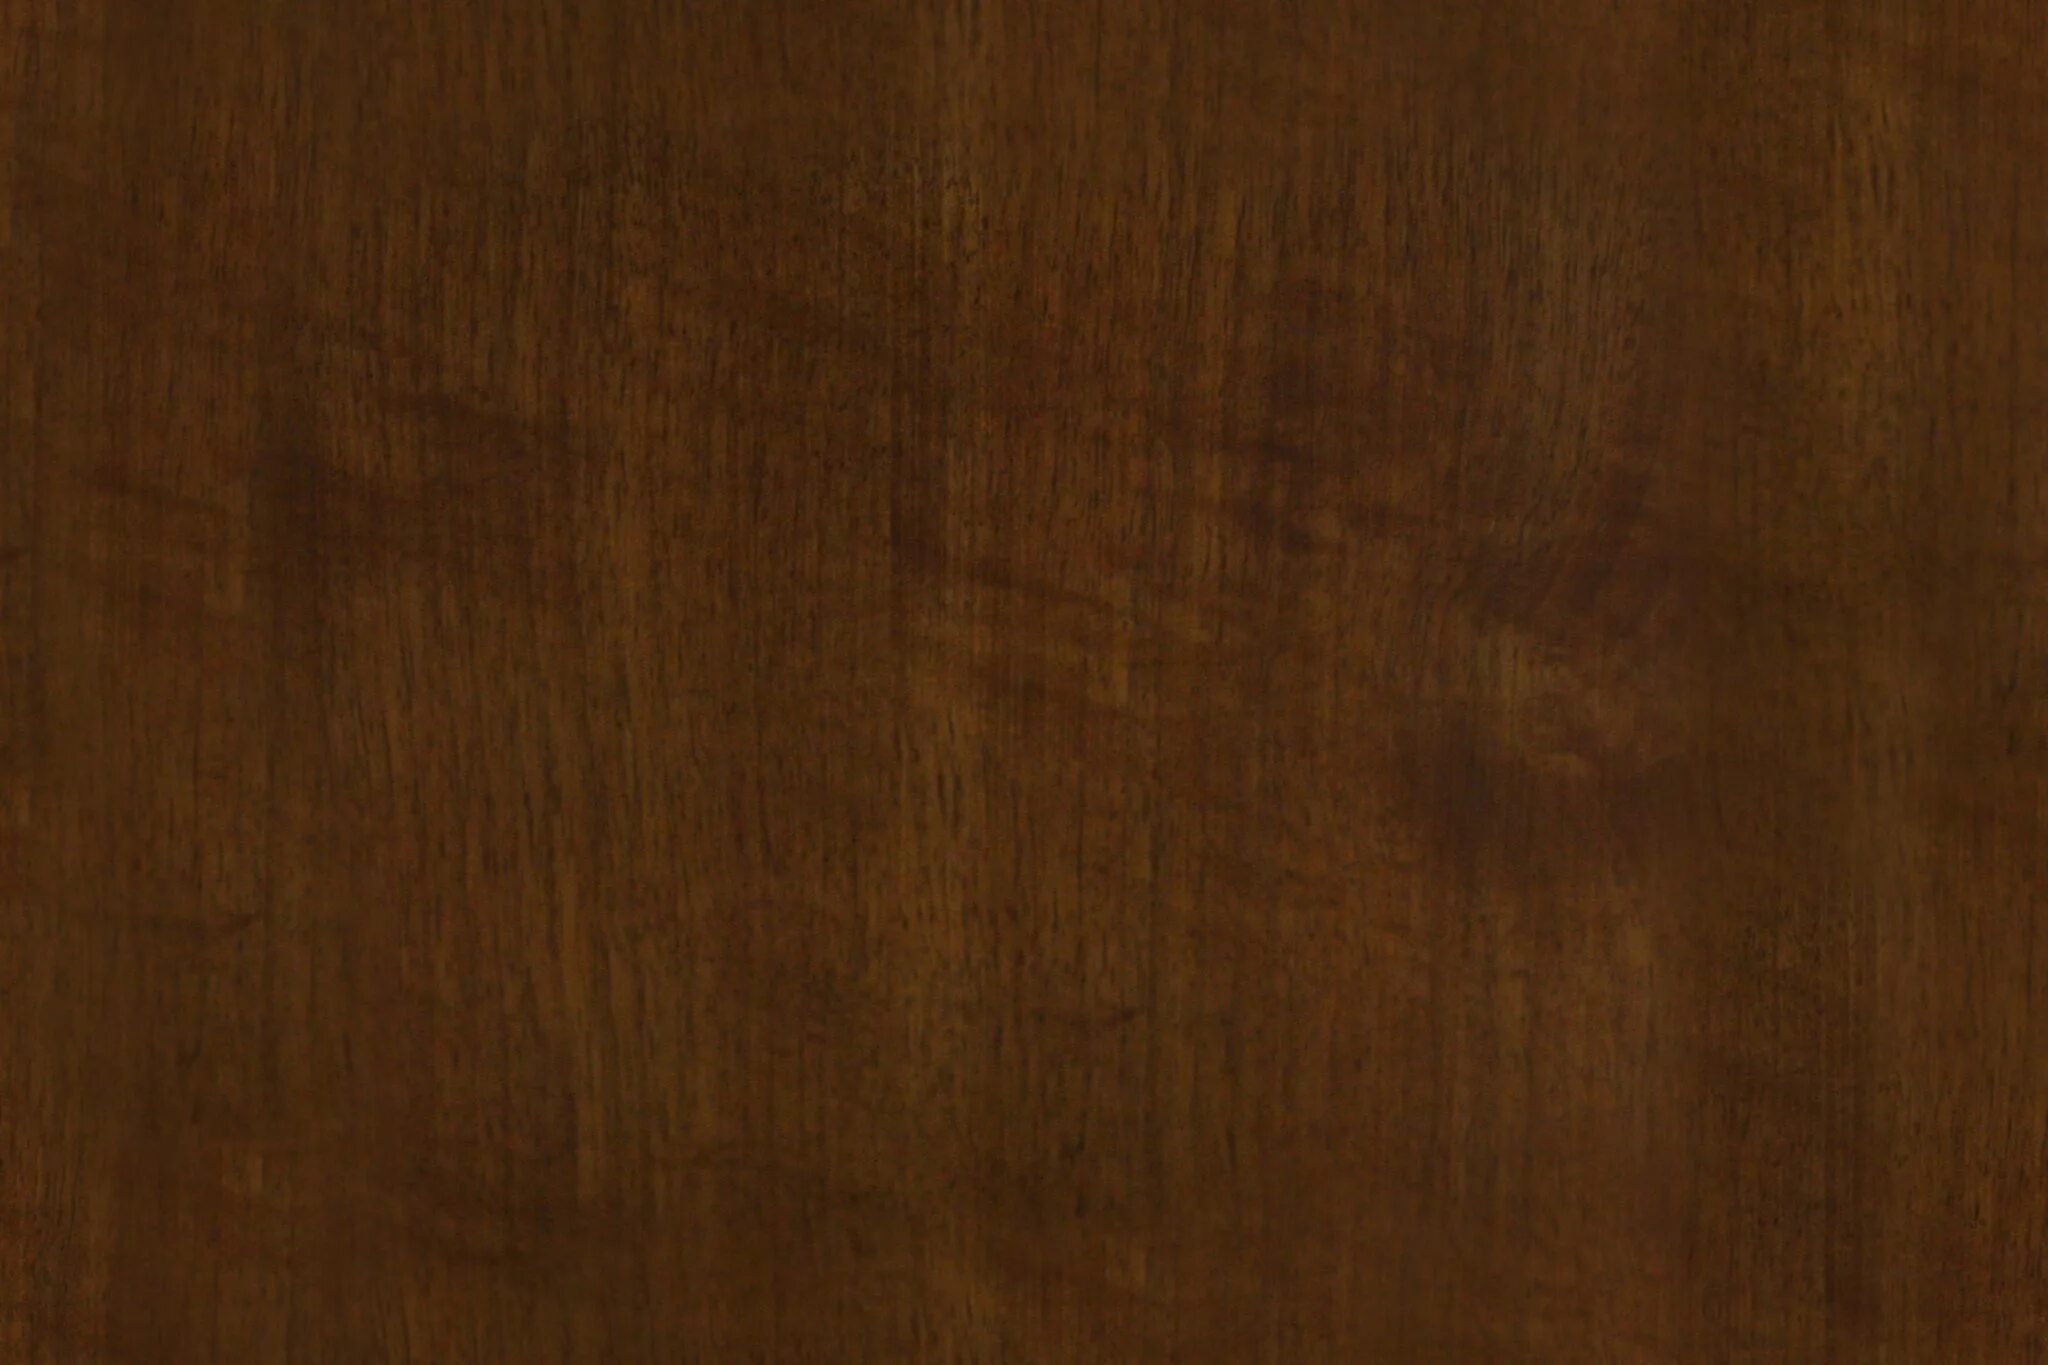 More wooden. Браунвуд дерево. Цвет кедр. Канадский кедр текстура бесшовная.